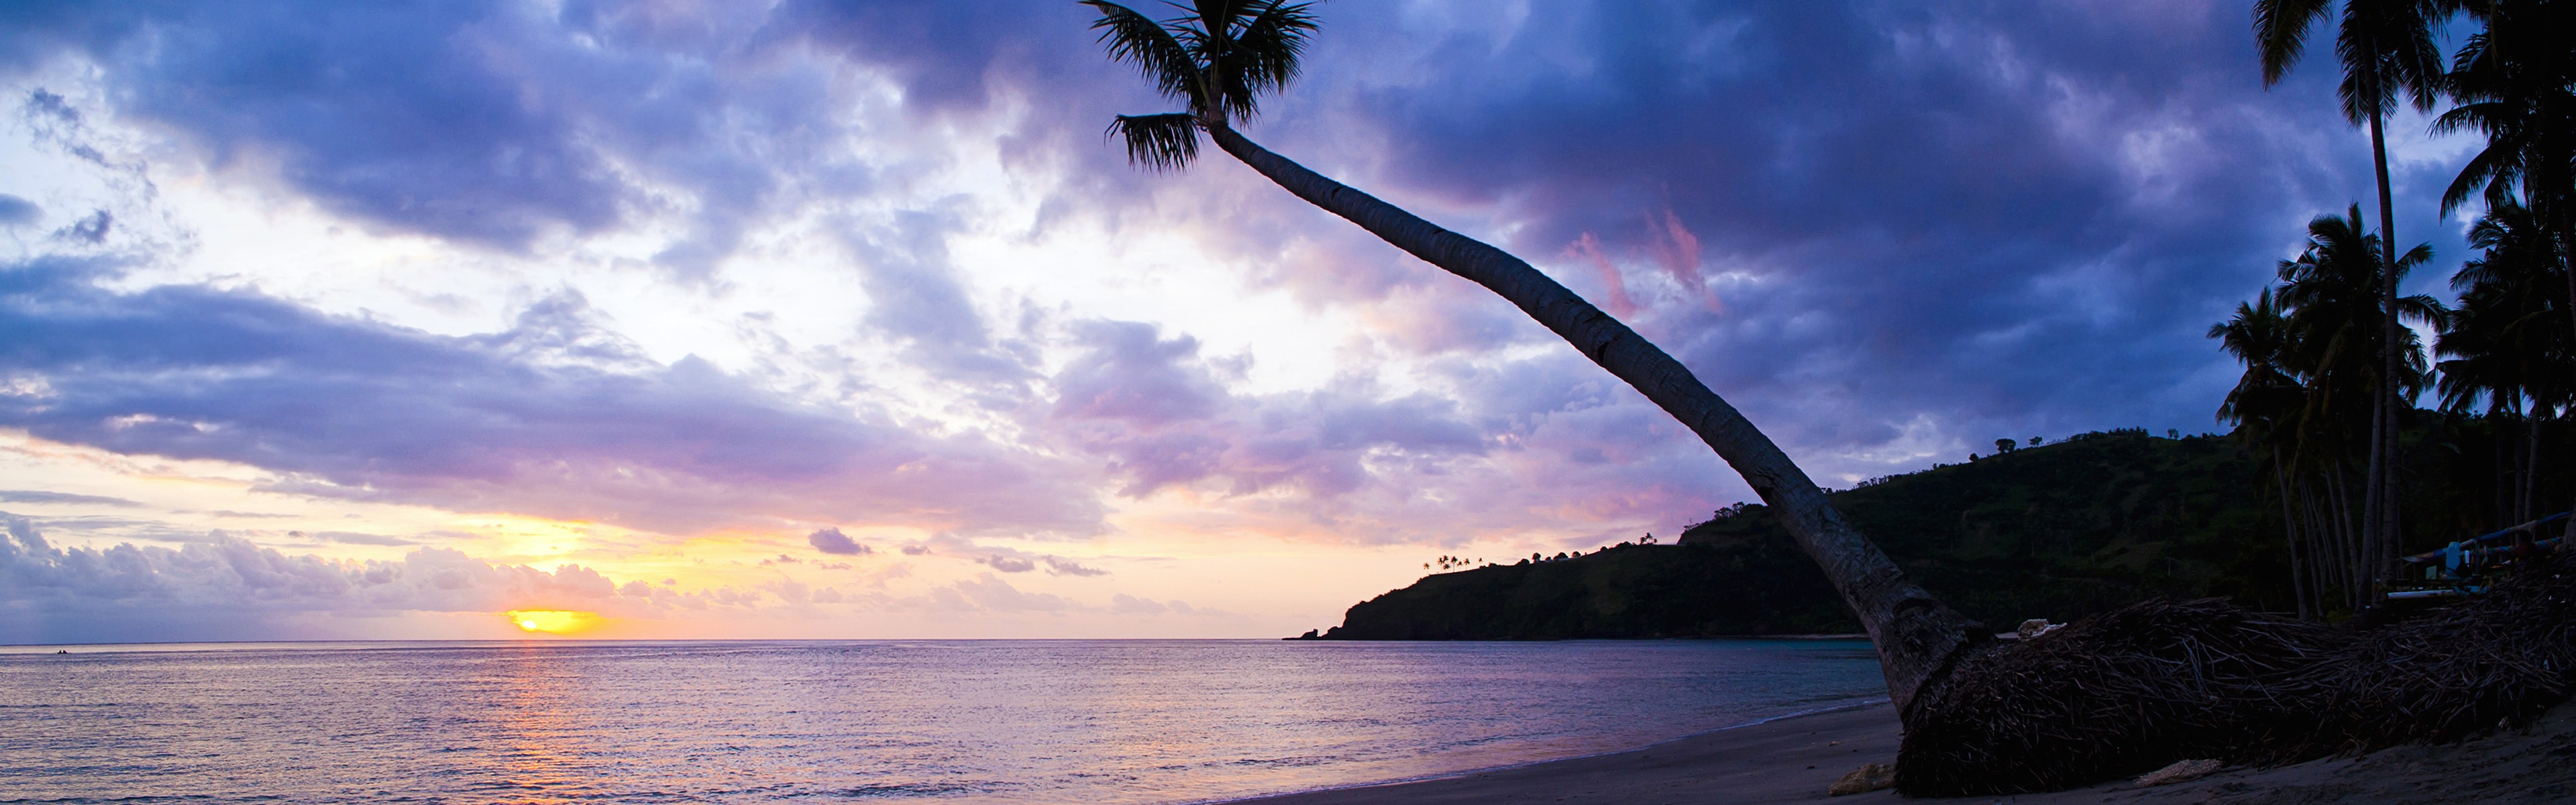 Beautiful beach sunset, Windows 8 panoramic widescreen wallpapers #8 - 3840x1200